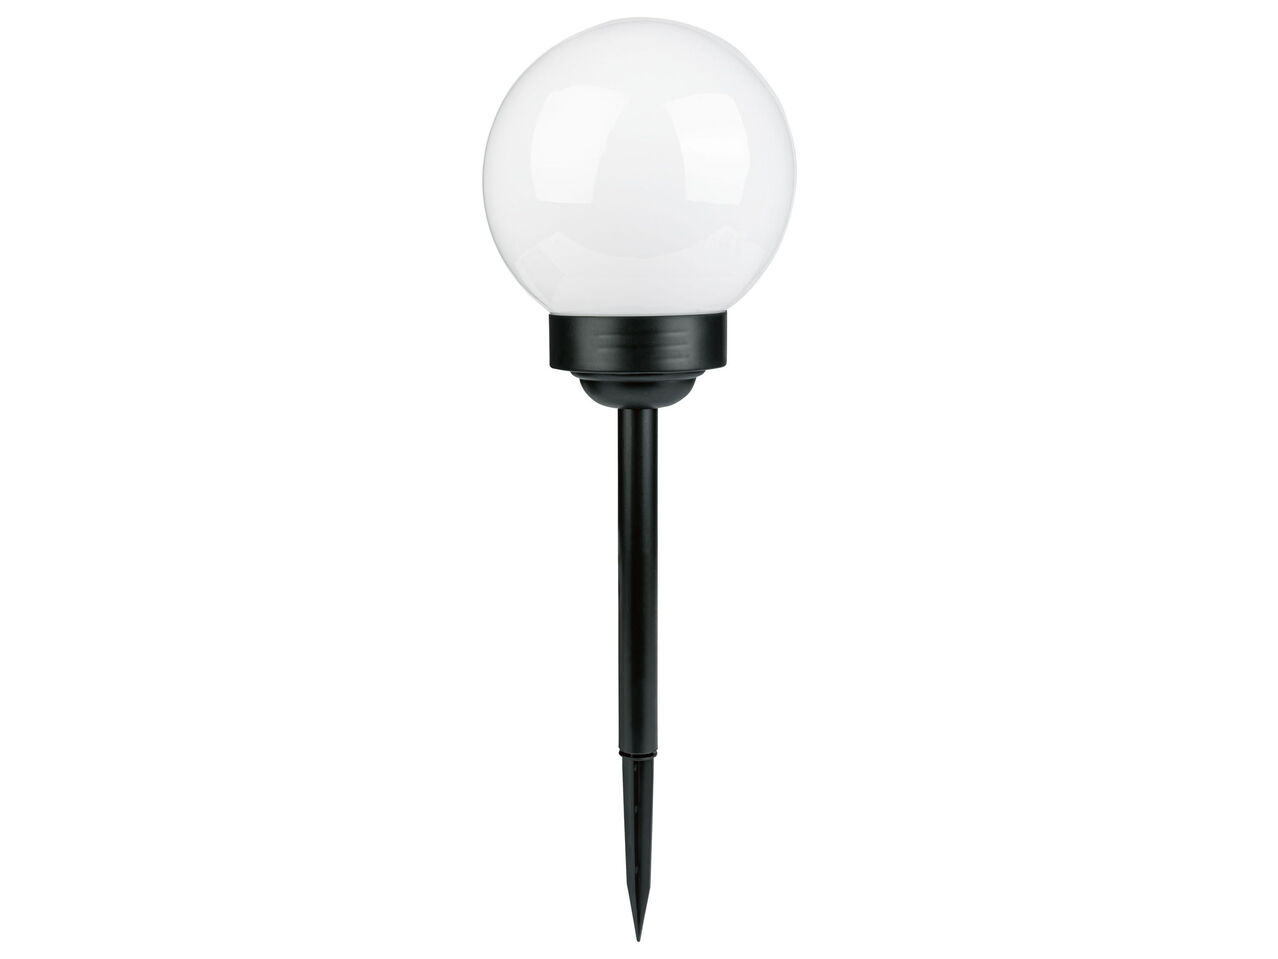 LIVARNO HOME® Lampa solarna LED Ø 15 cm , cena 19,99 PLN 

- czas świecenia: ...